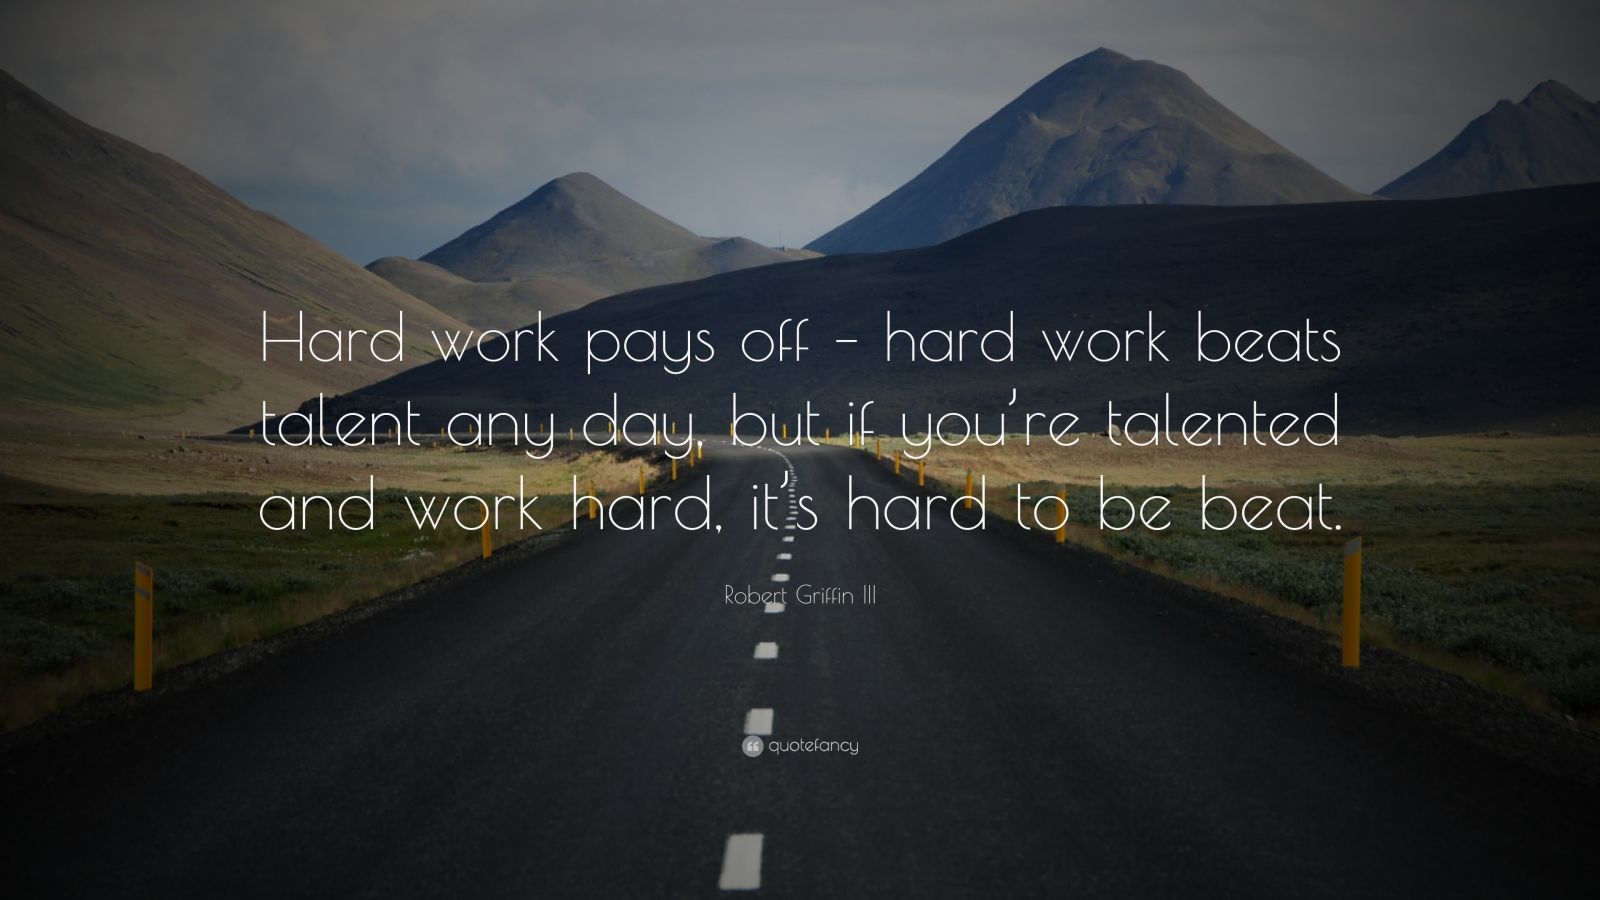 Robert Griffin III Quote: “Hard work pays off – hard work beats talent